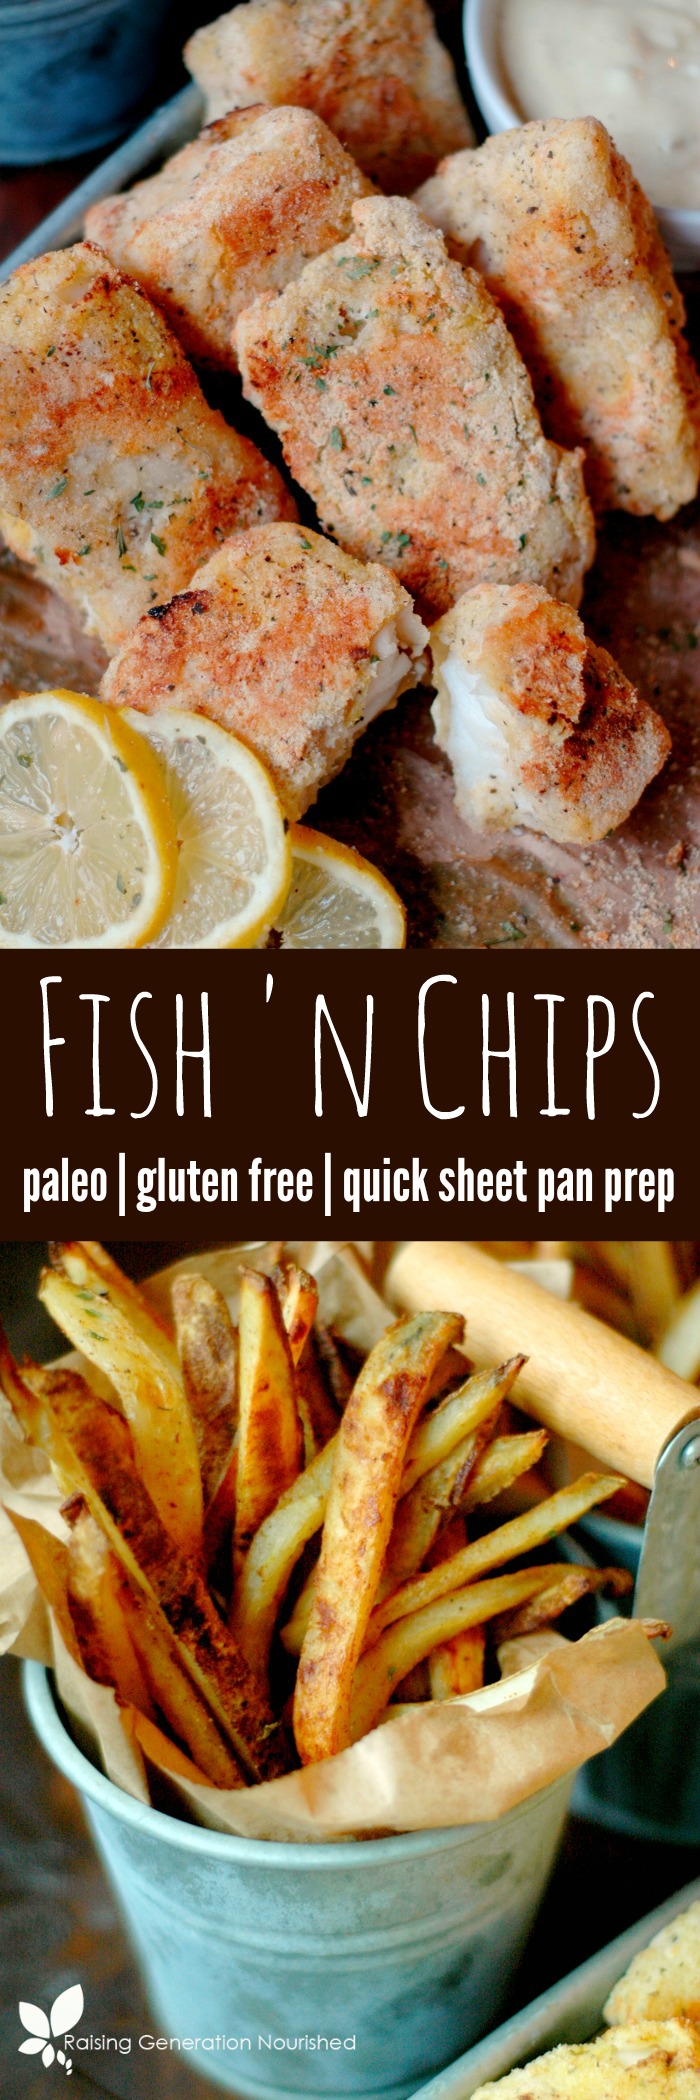 Paleo Fish 'N Chips :: Quick Sheet Pan Prep!